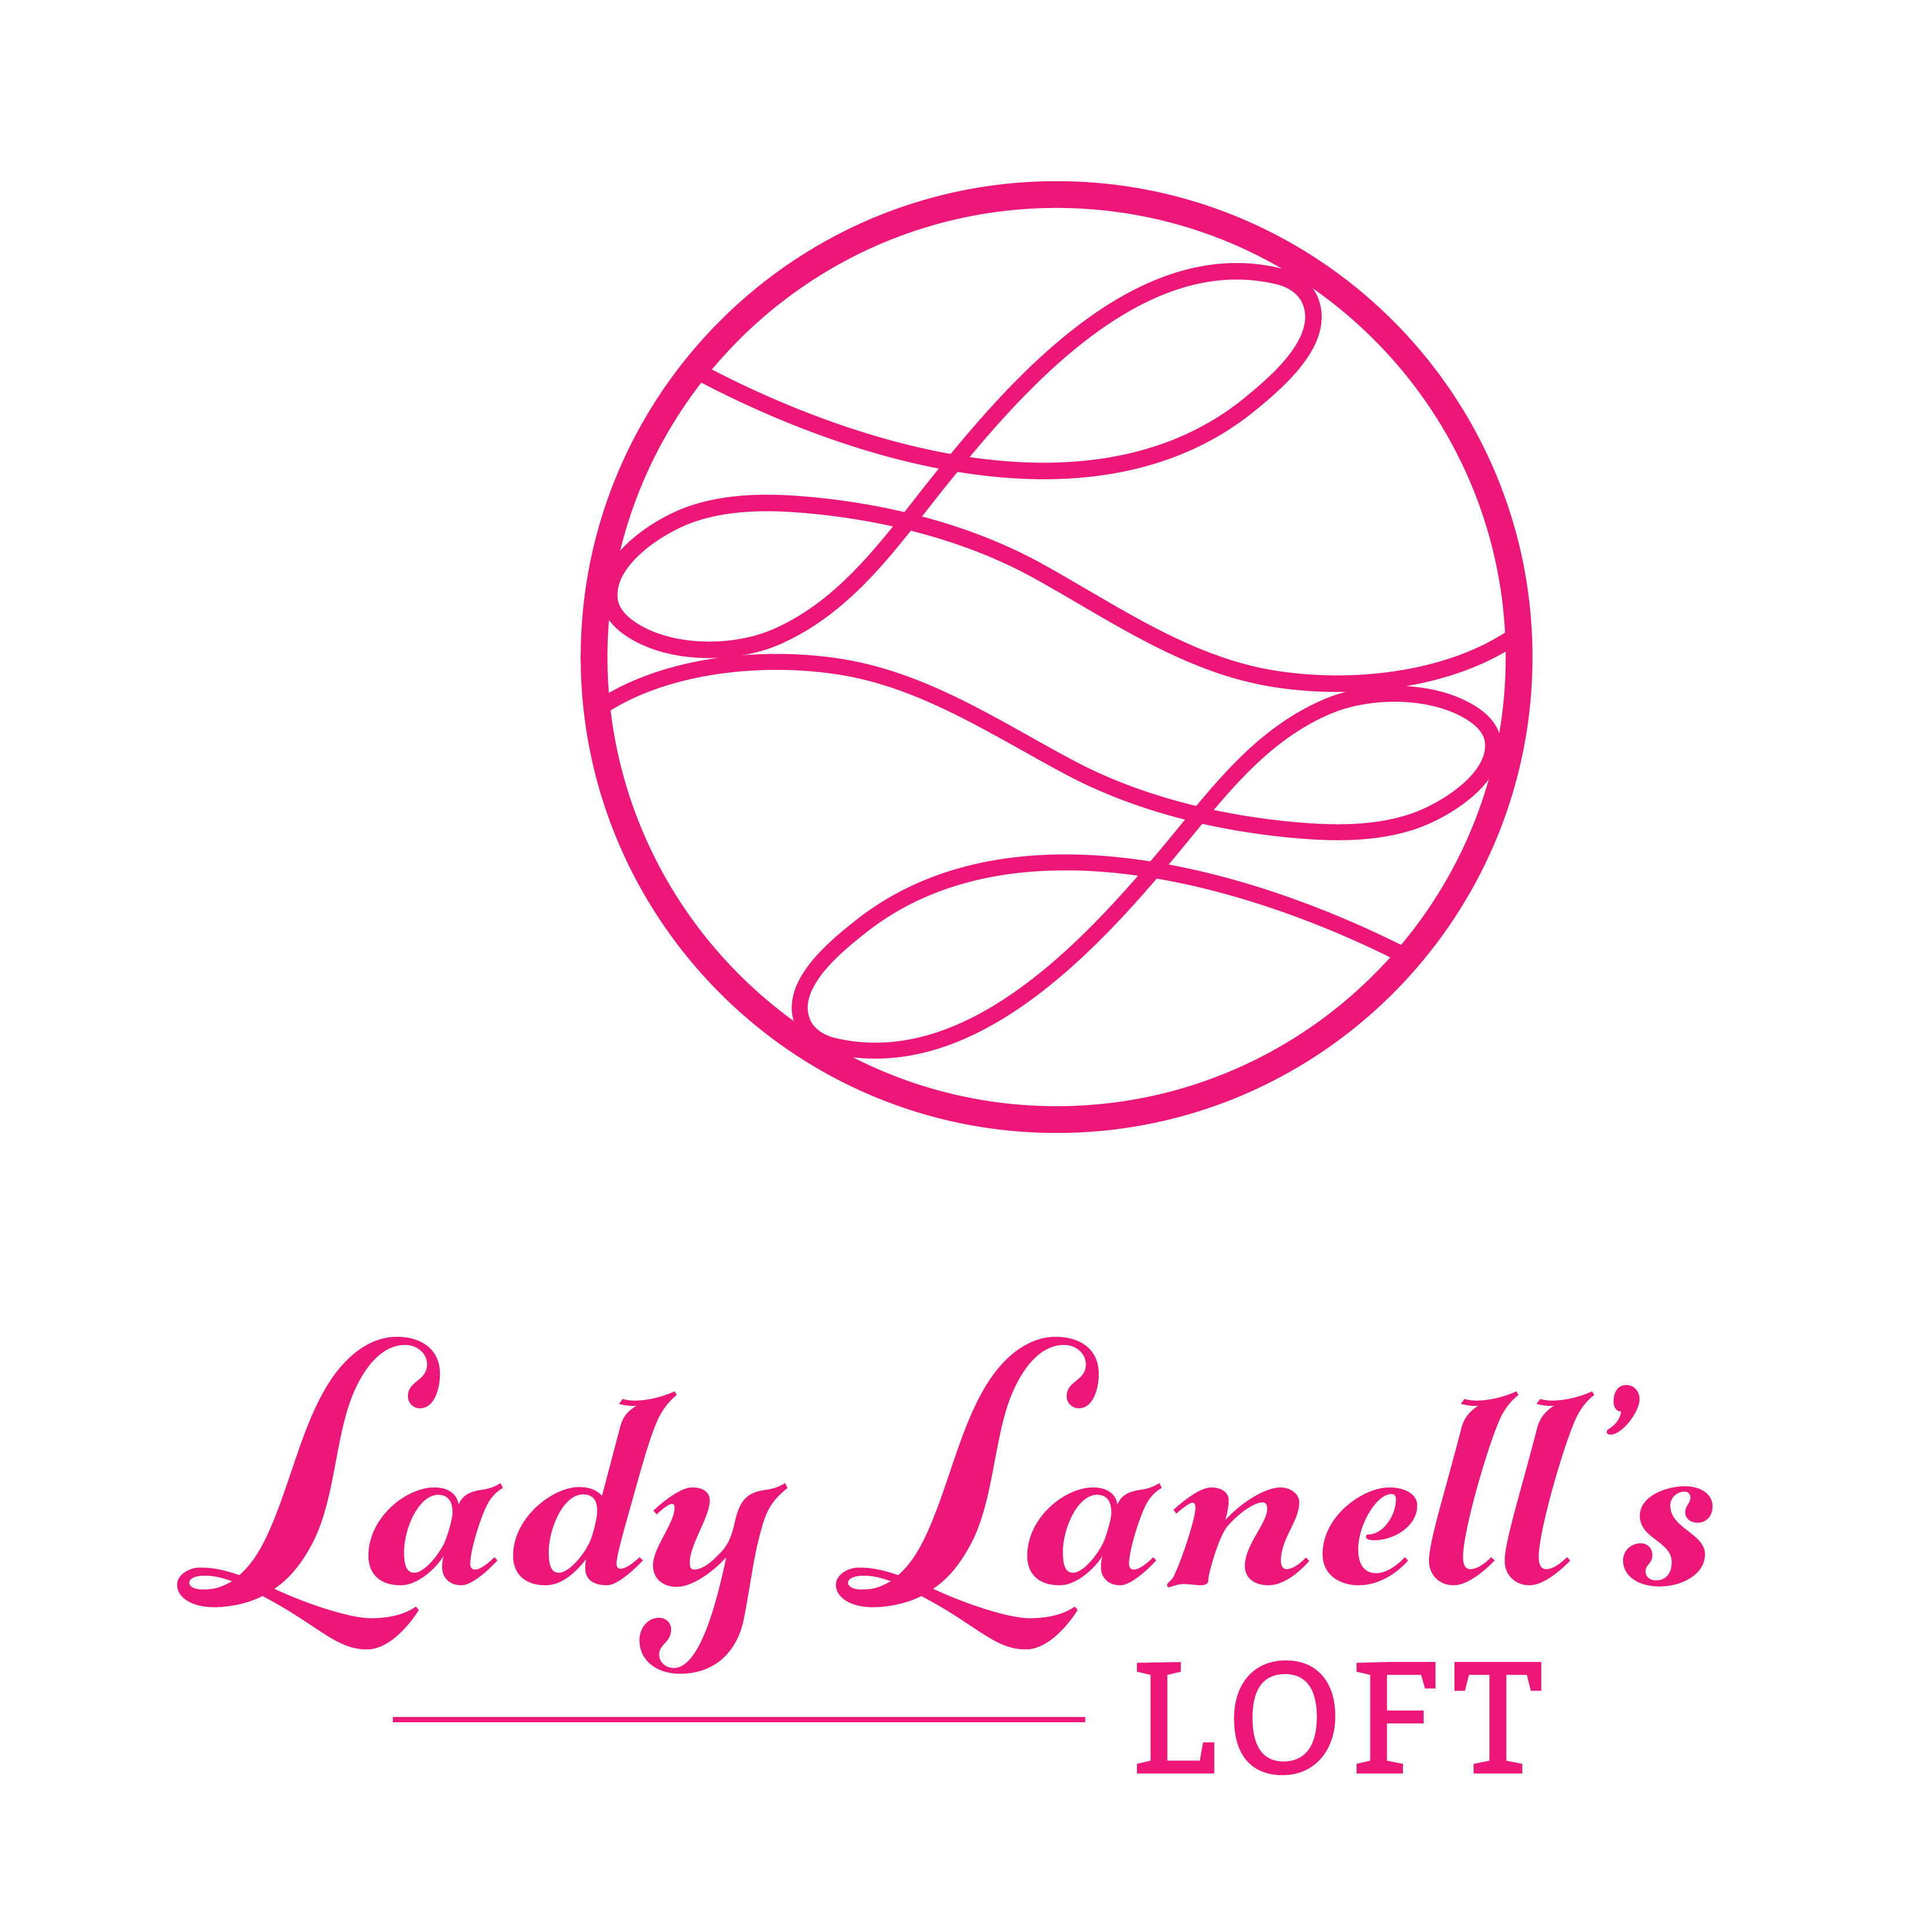 Lady Lanell's Loft